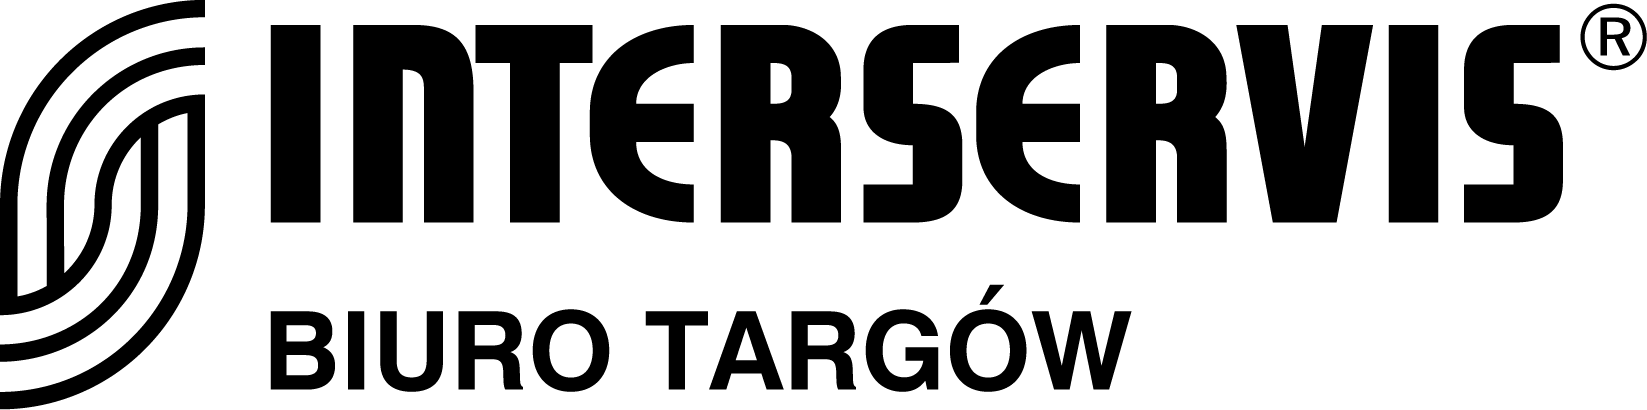 Interservis logo png